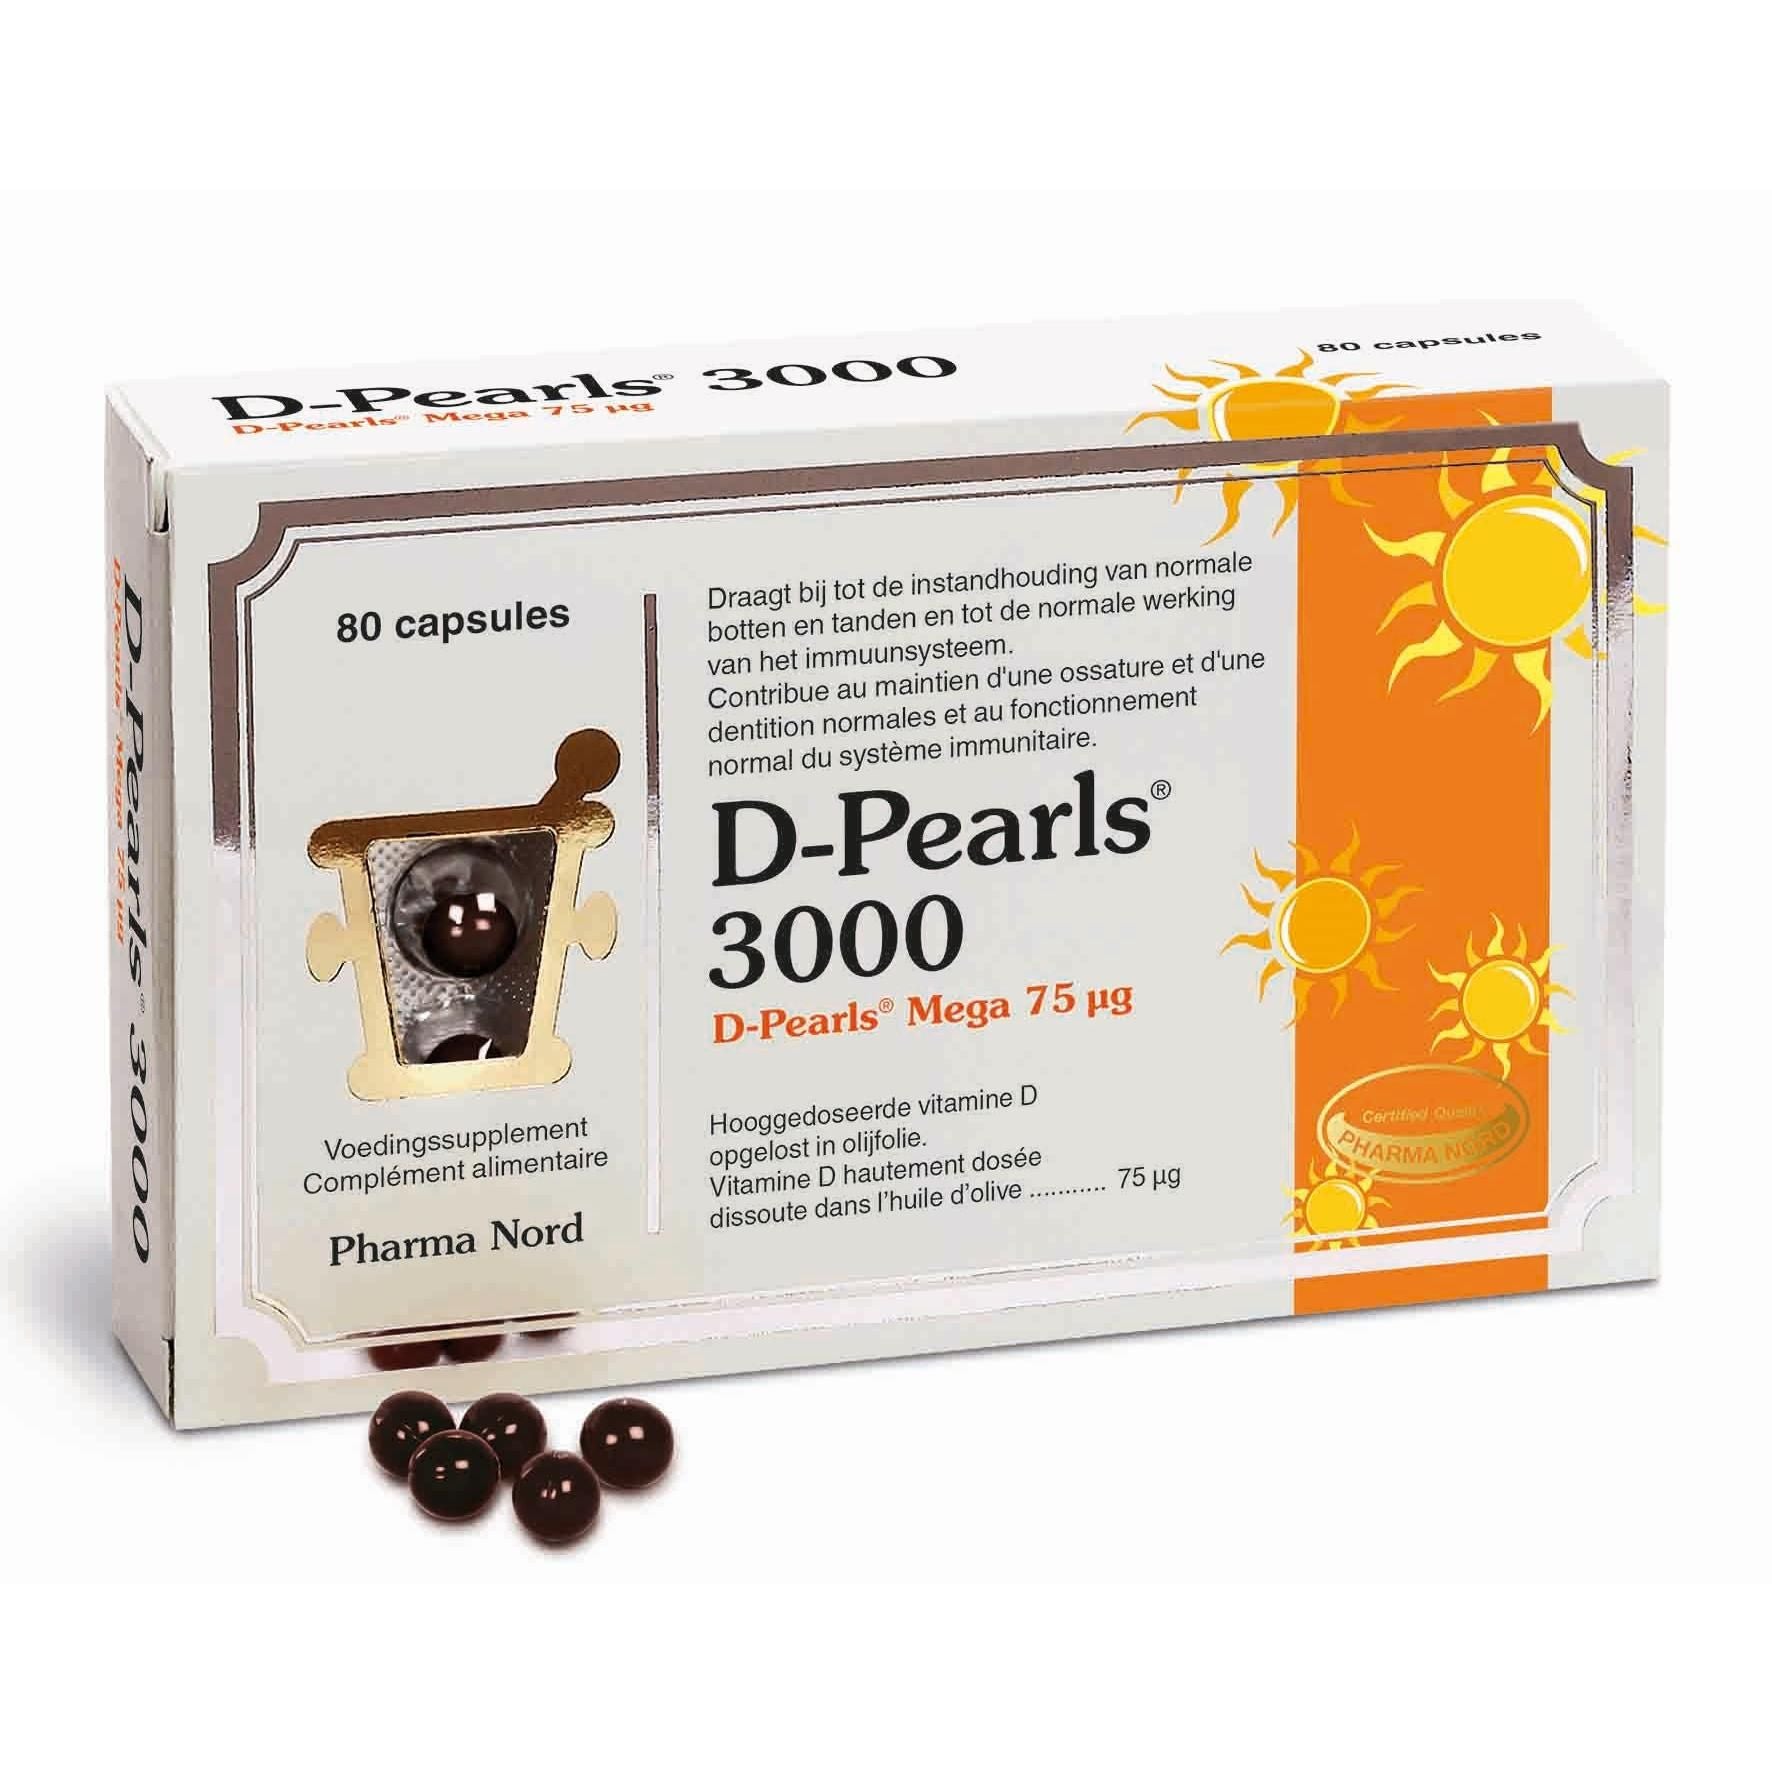 D-Pearls 3000 - Vitamine D Hautement dosée